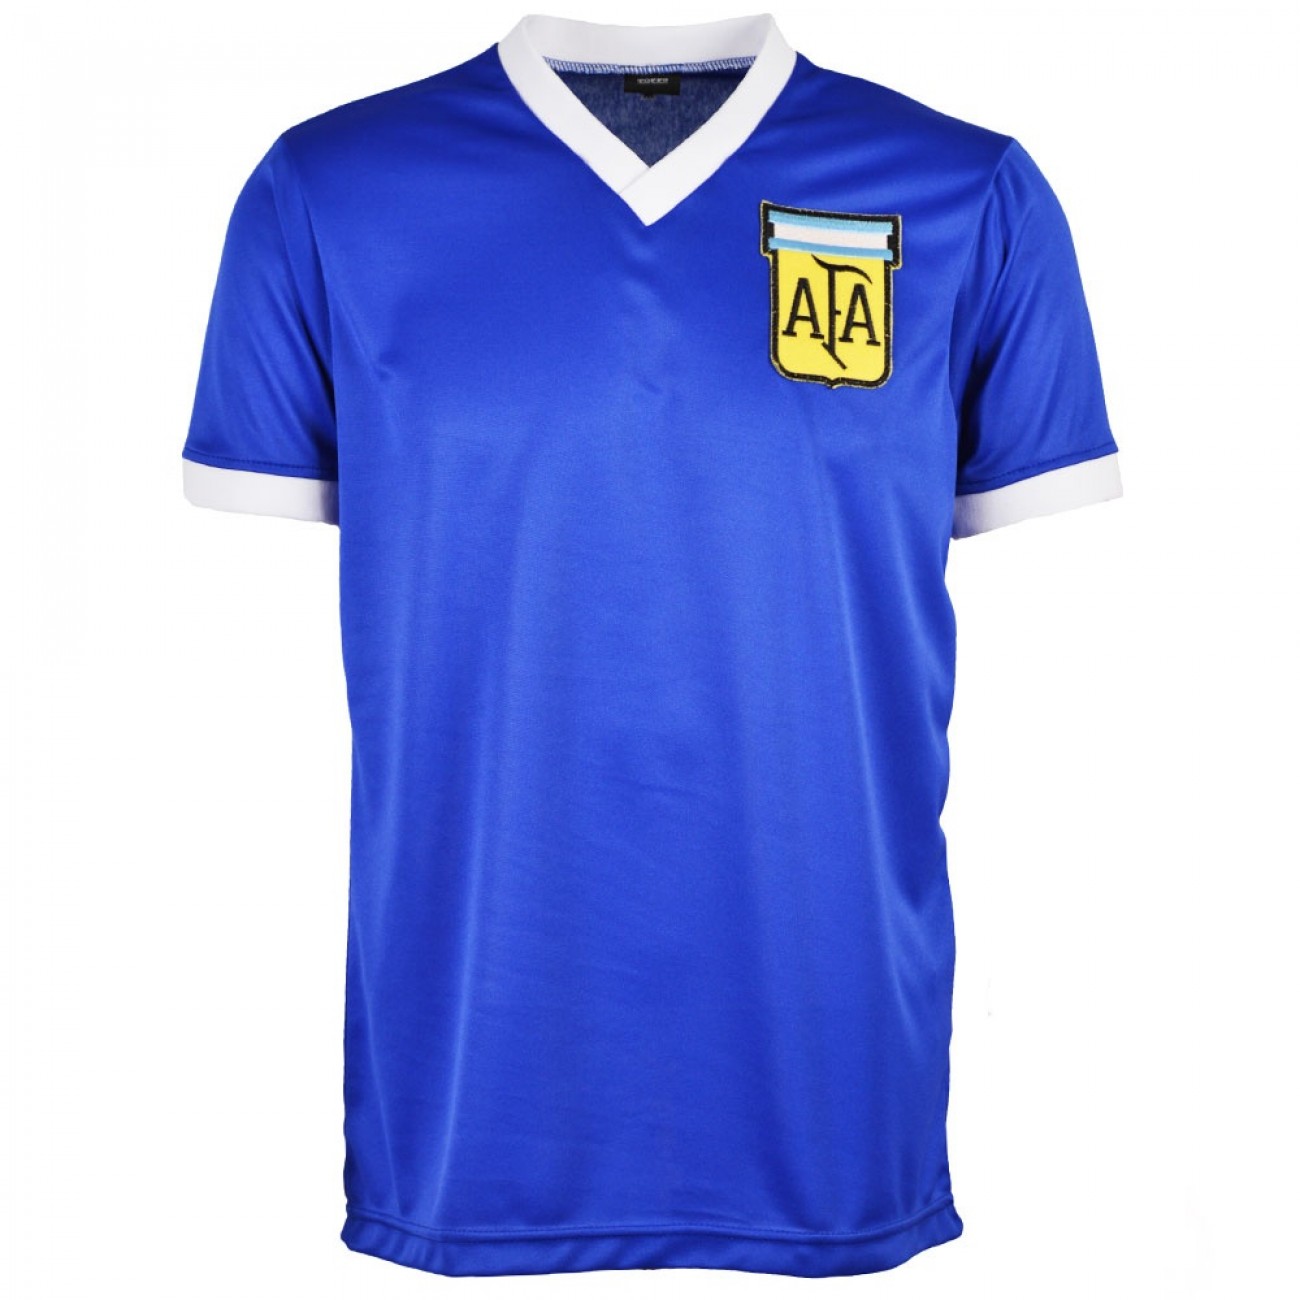 1986 argentina jersey